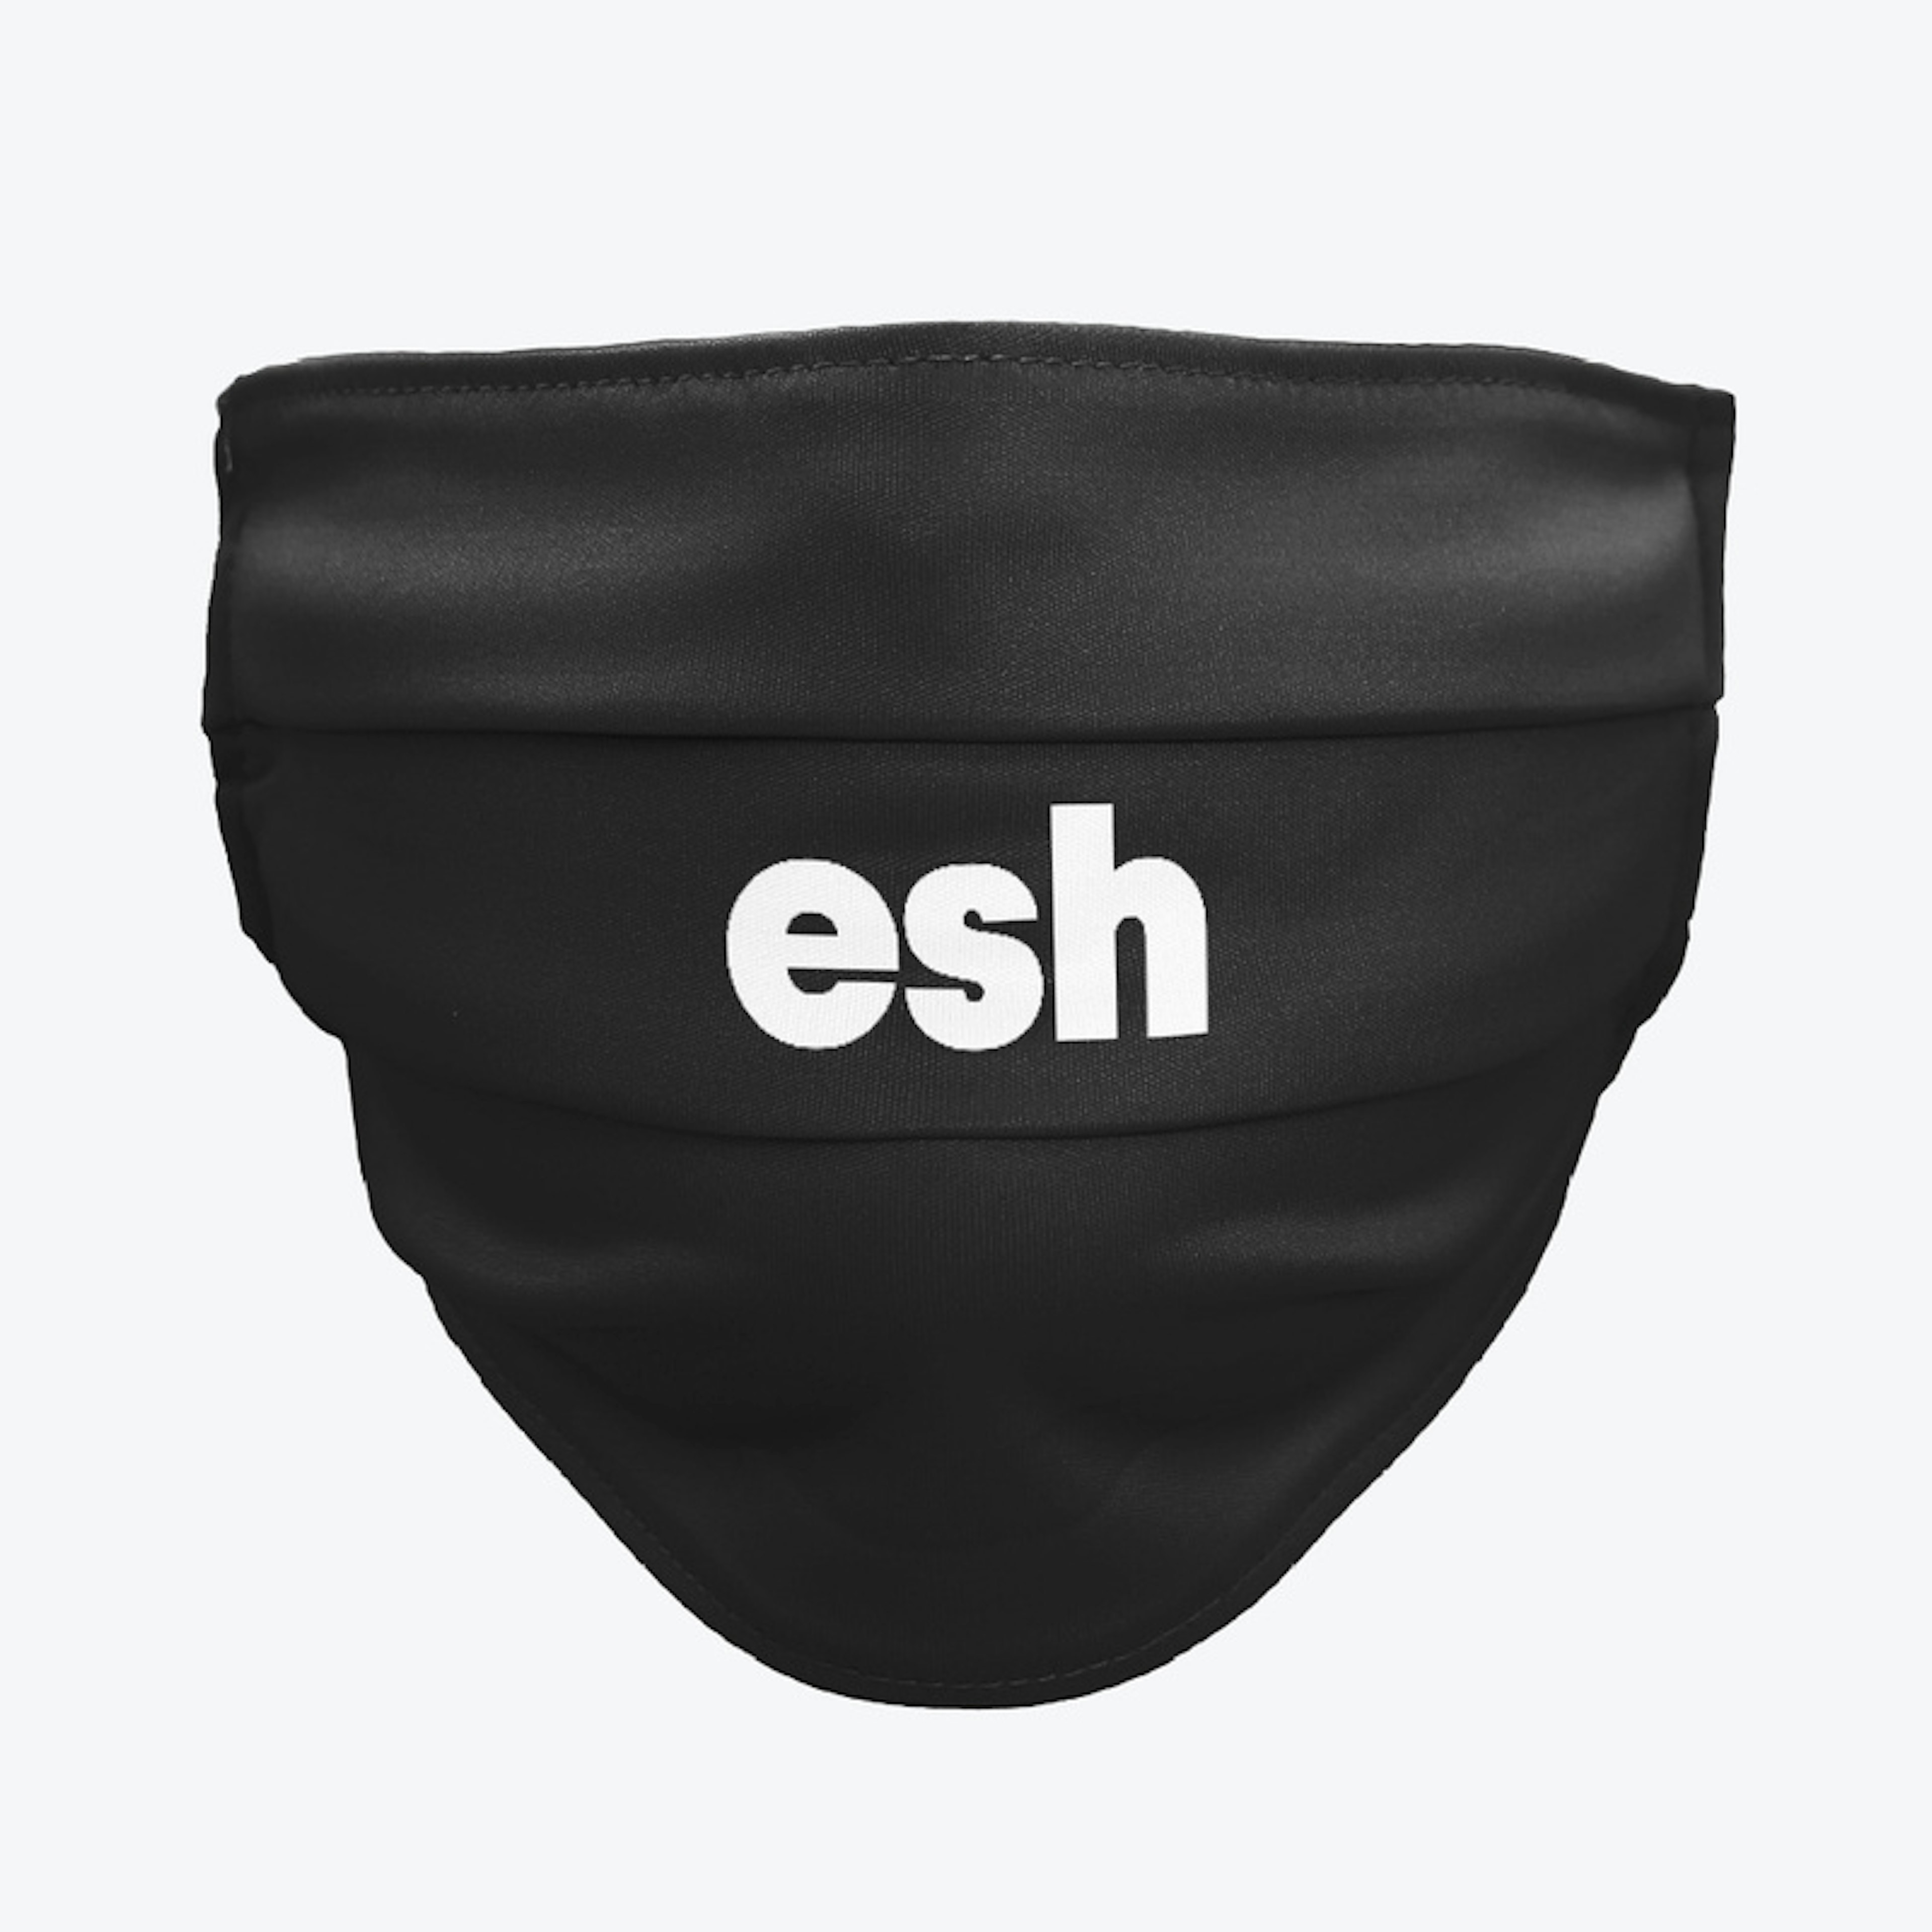 Esh Face Mask